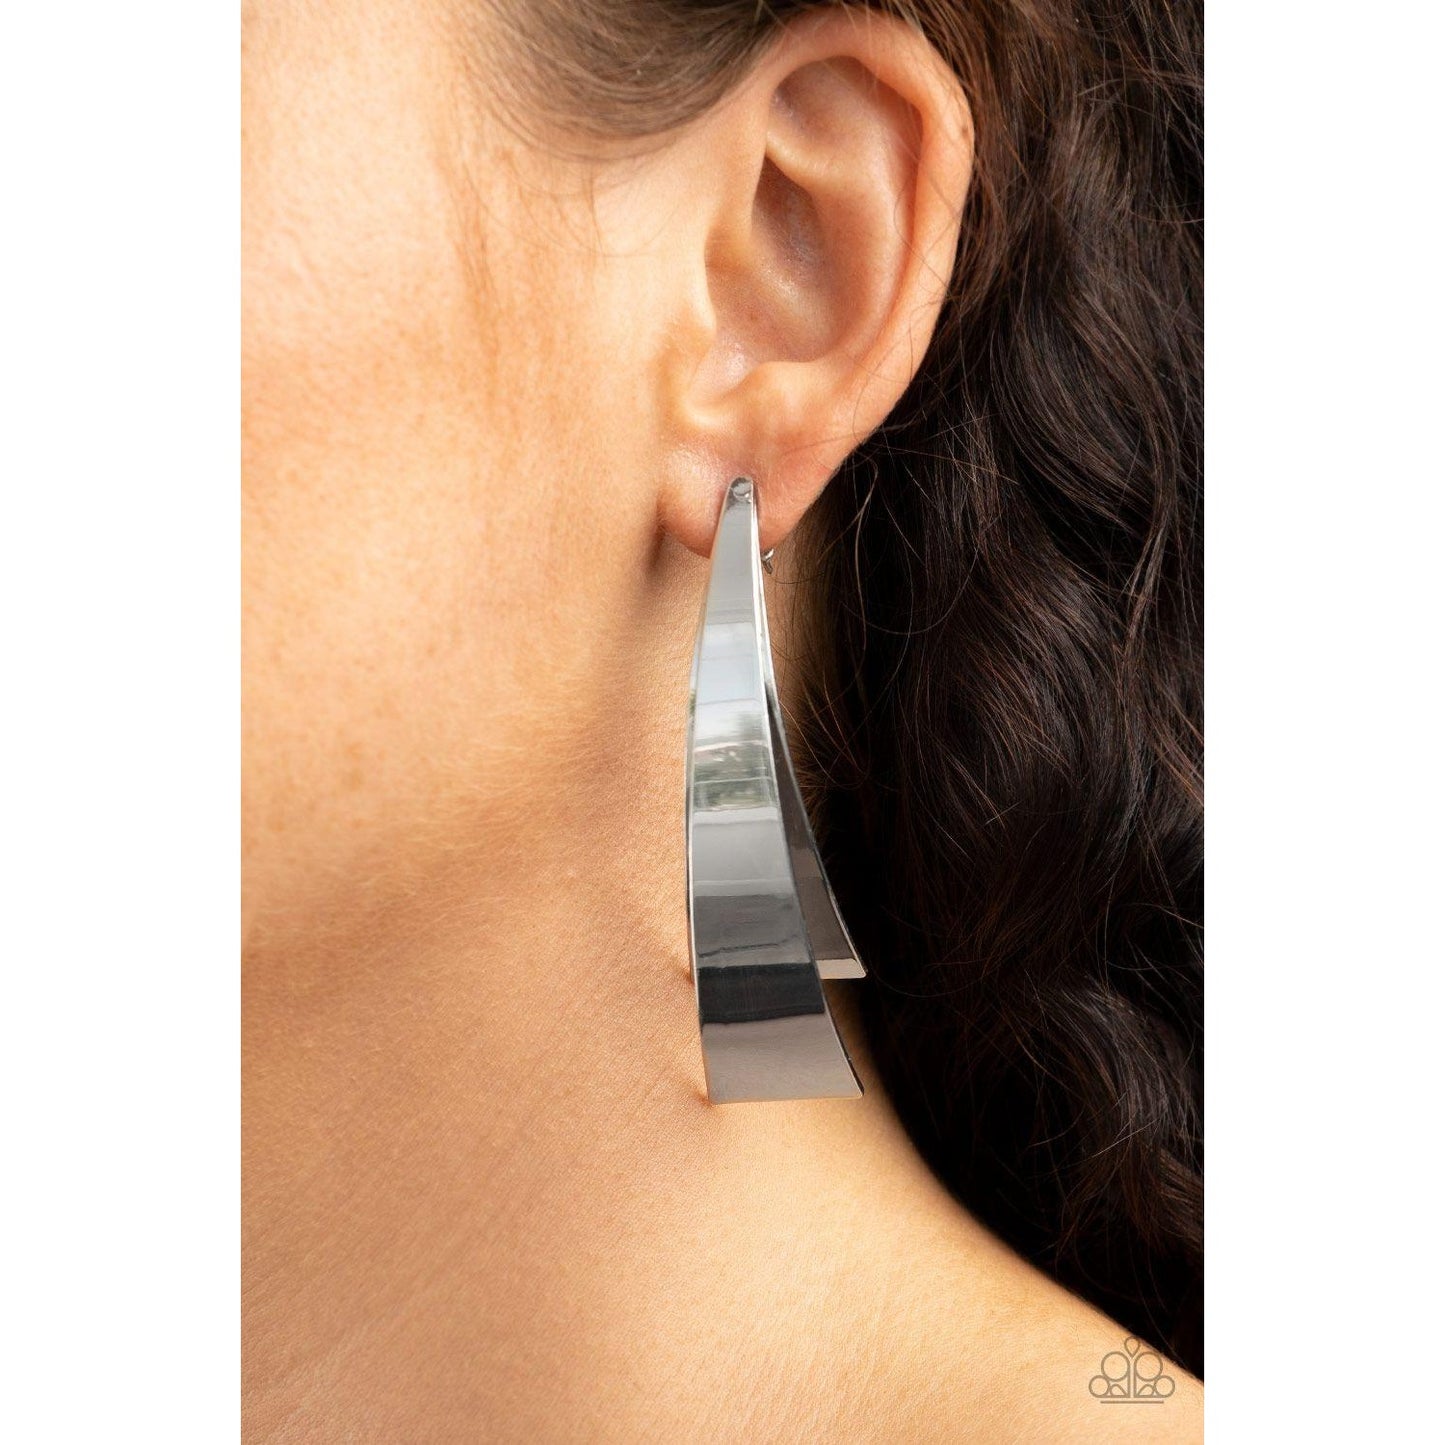 Underestimated Edge – Silver Earrings 1496